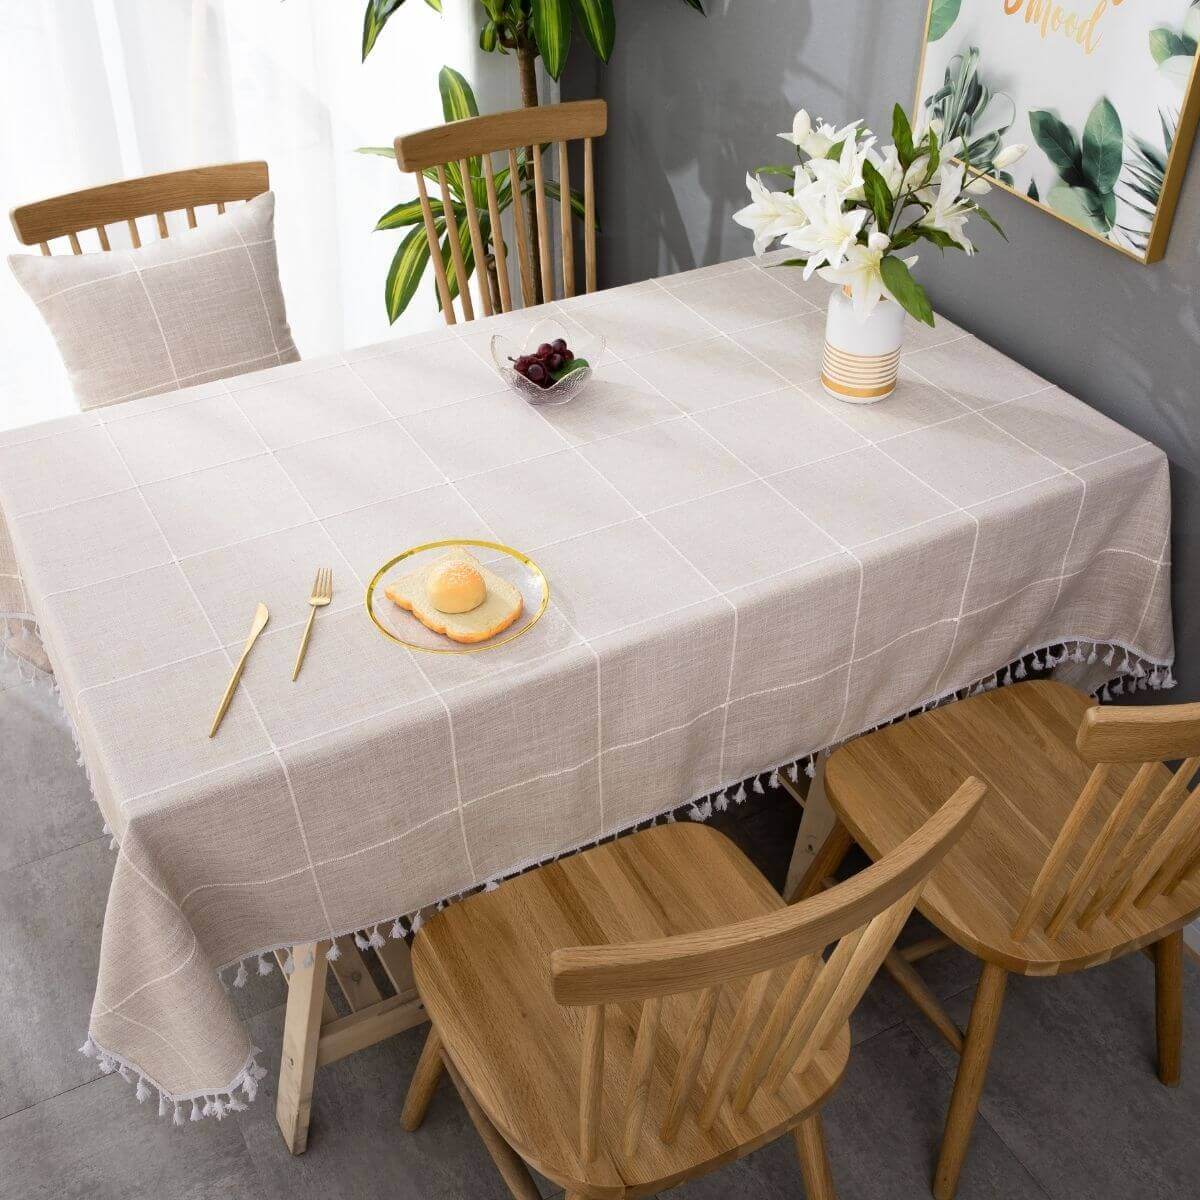 SASTYBALE beige linen tablecloth